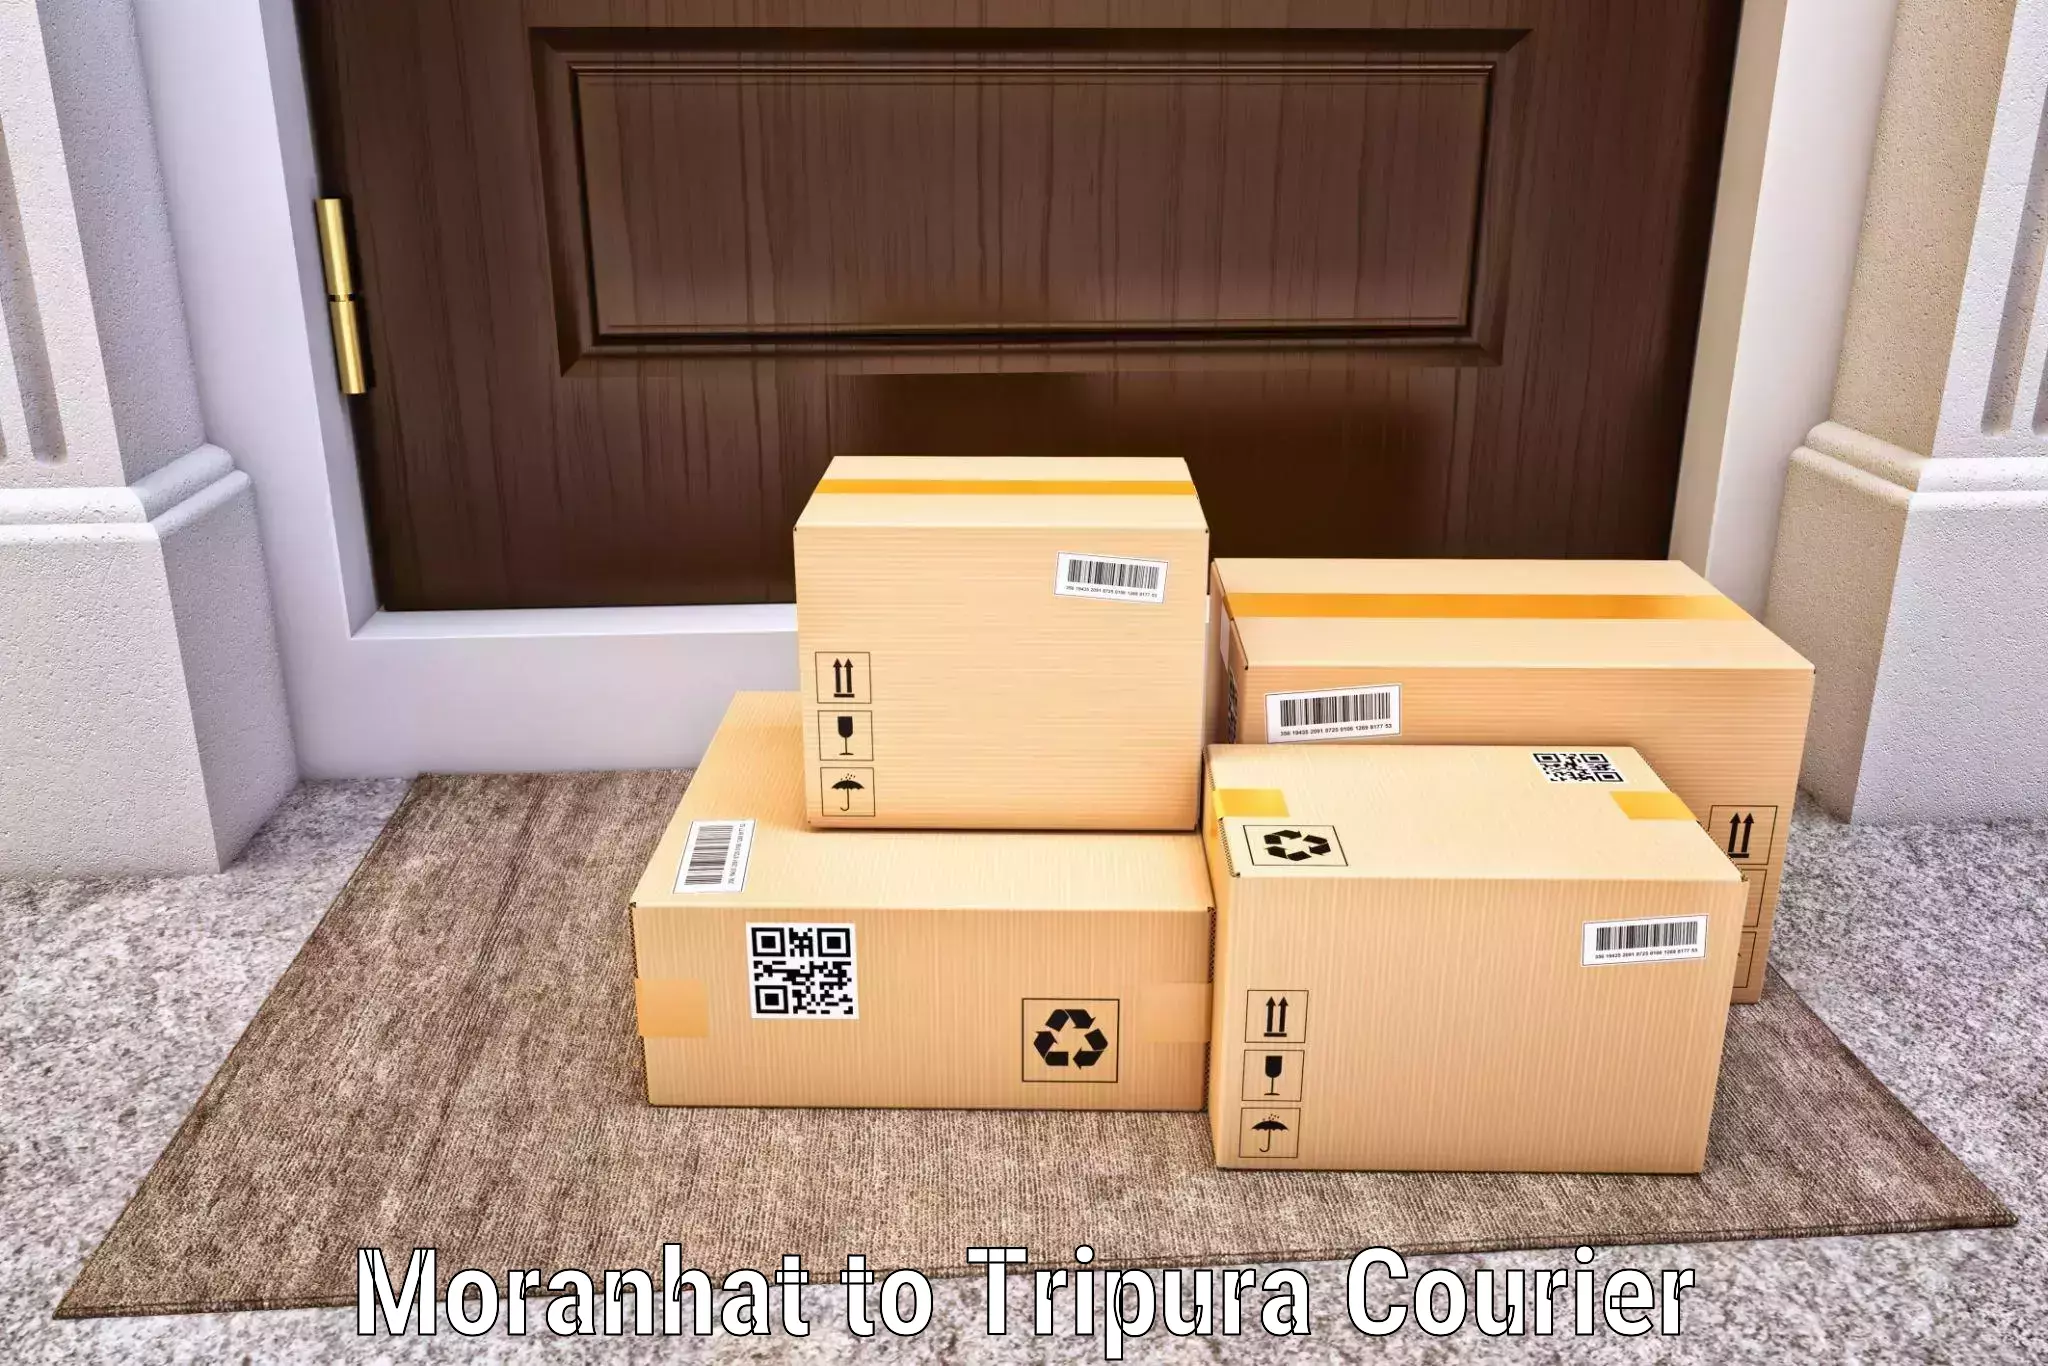 Courier service efficiency Moranhat to Agartala